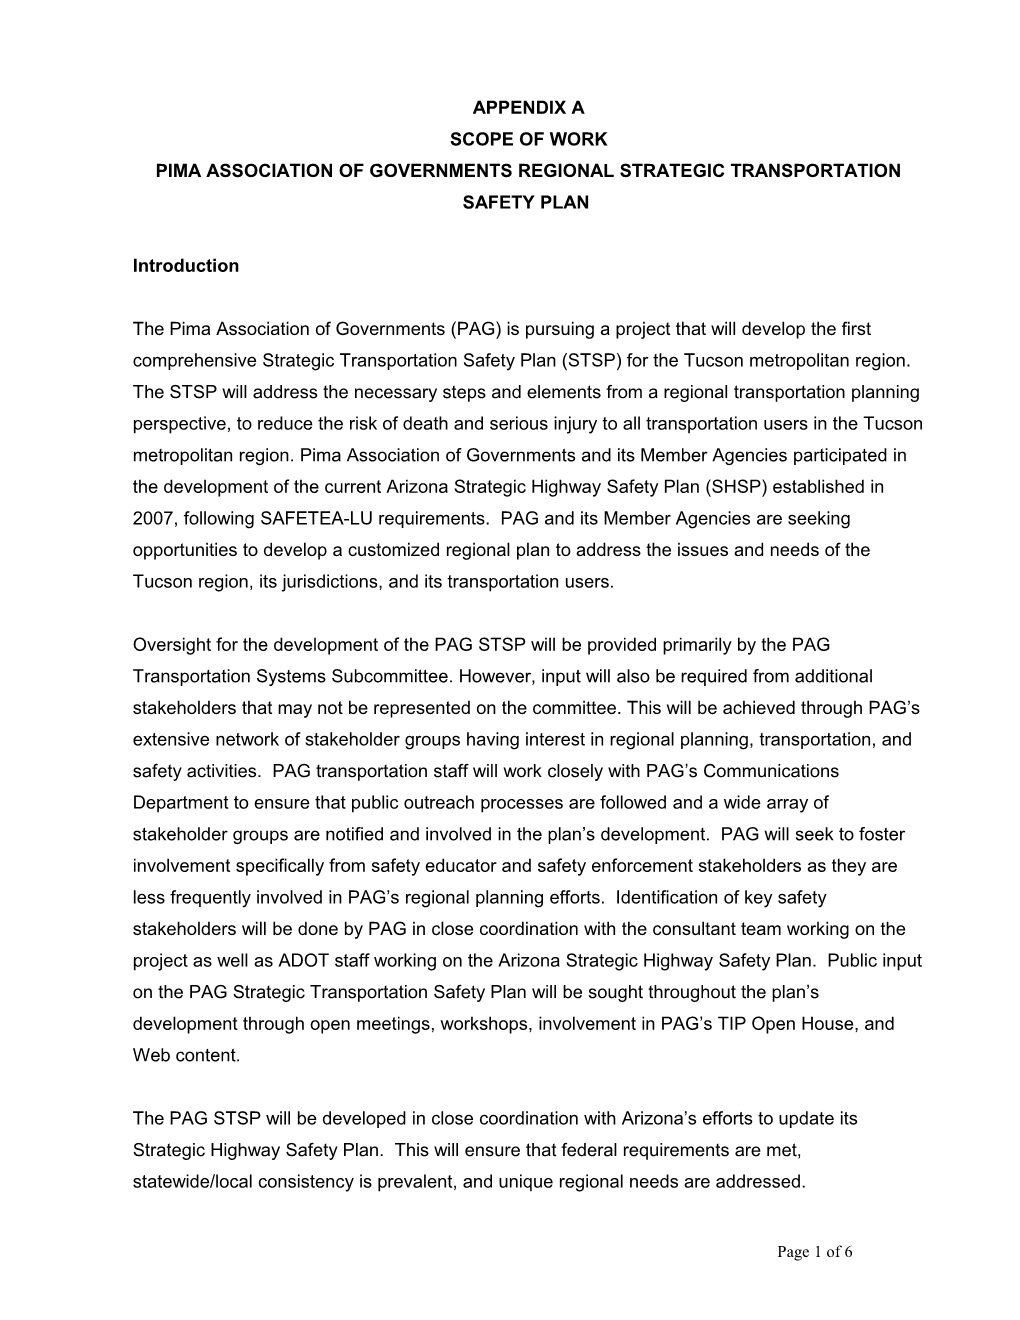 Pima Association of Governments Regional Strategic Transportation Safety Plan